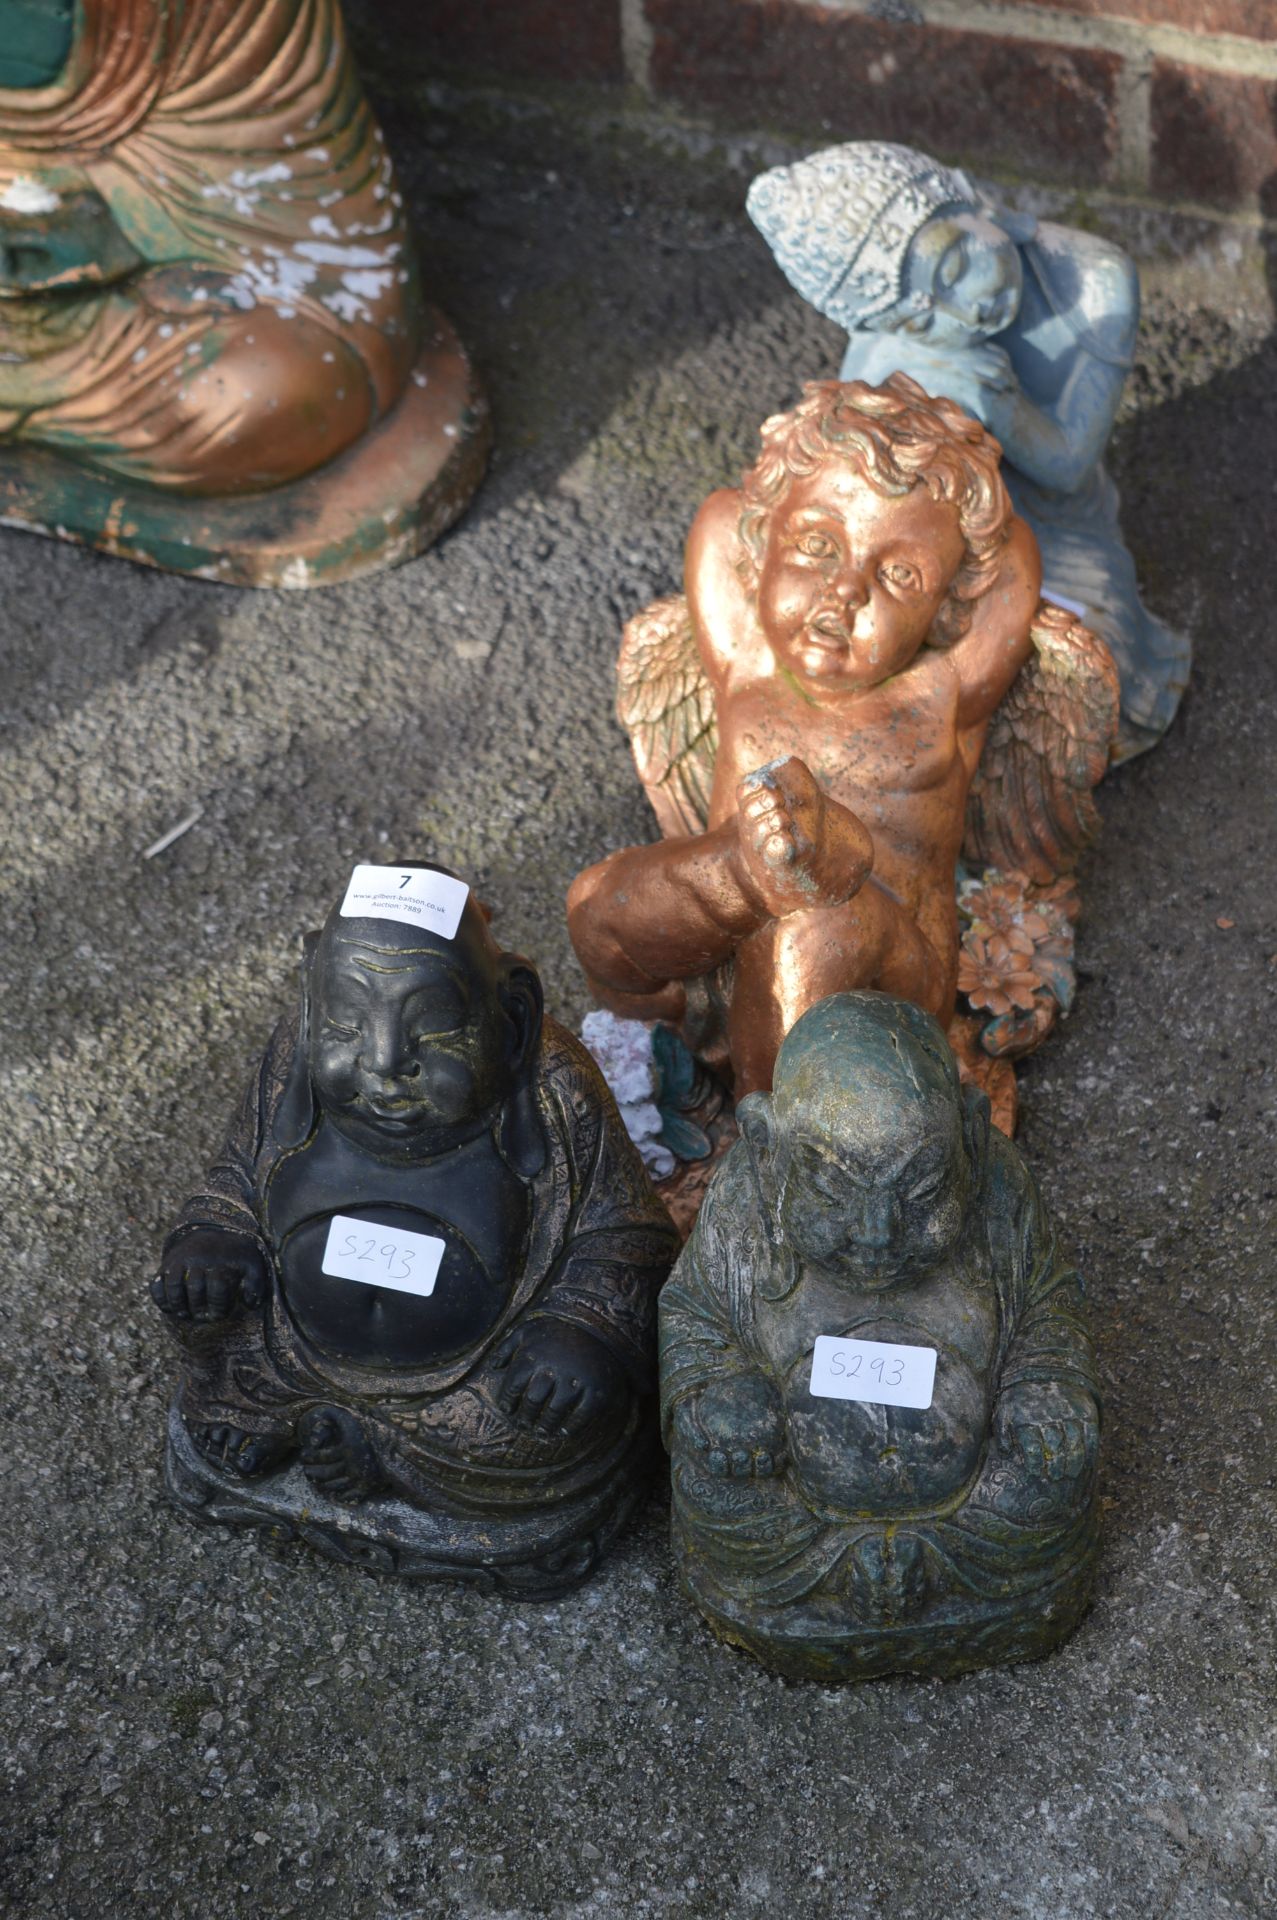 Four Concrete Garden Ornaments - Buddhas and a Che